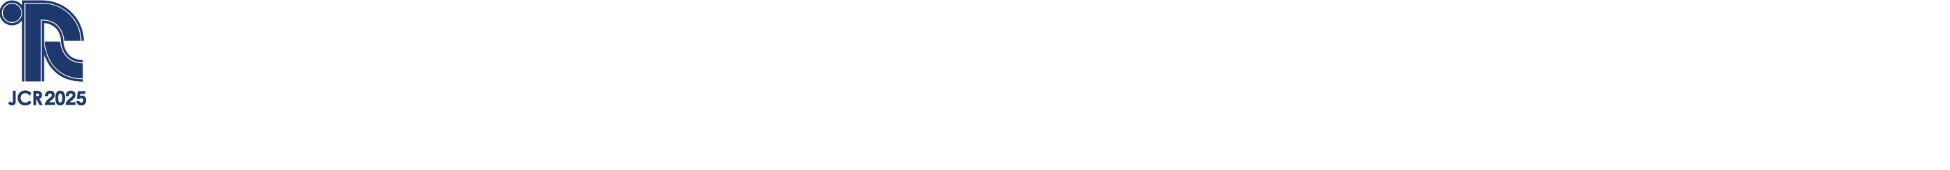 第69回日本リウマチ学会総会・学術集会